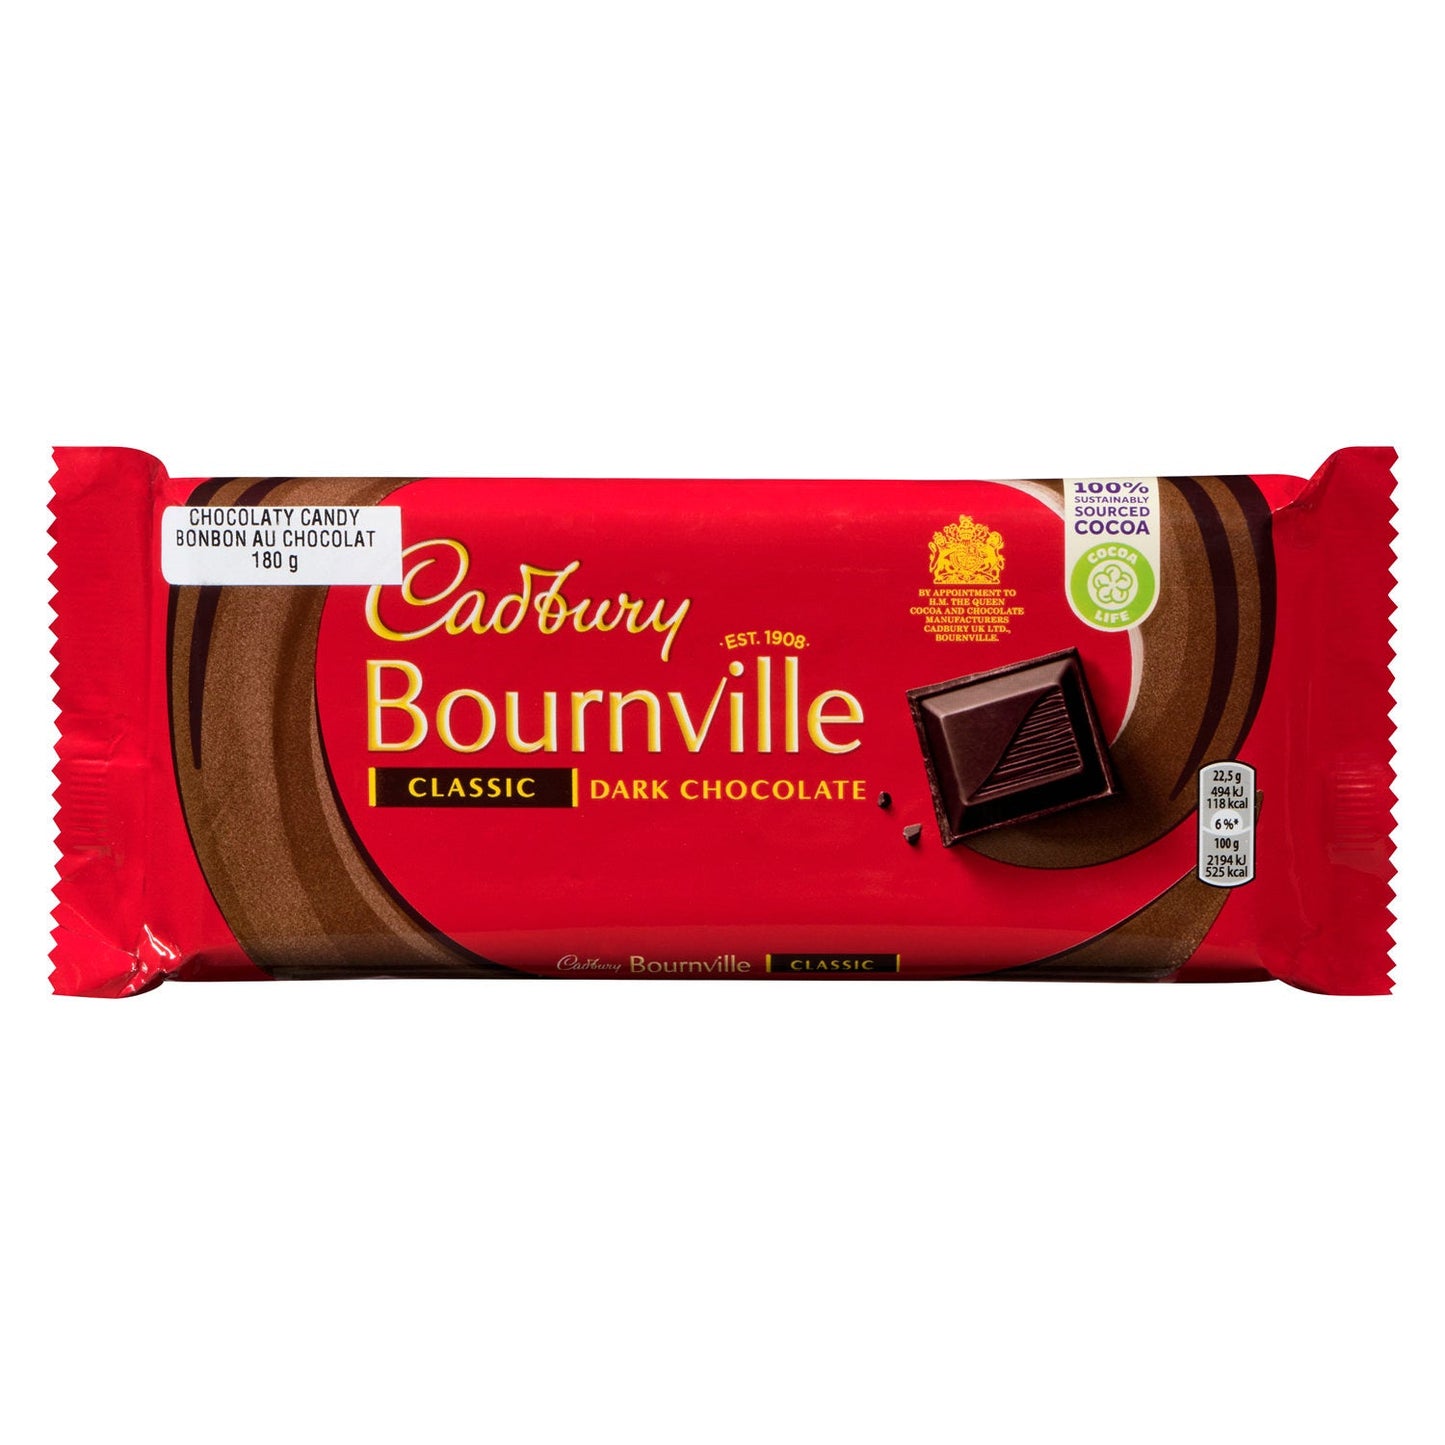 Cadbury's Bournville 100g